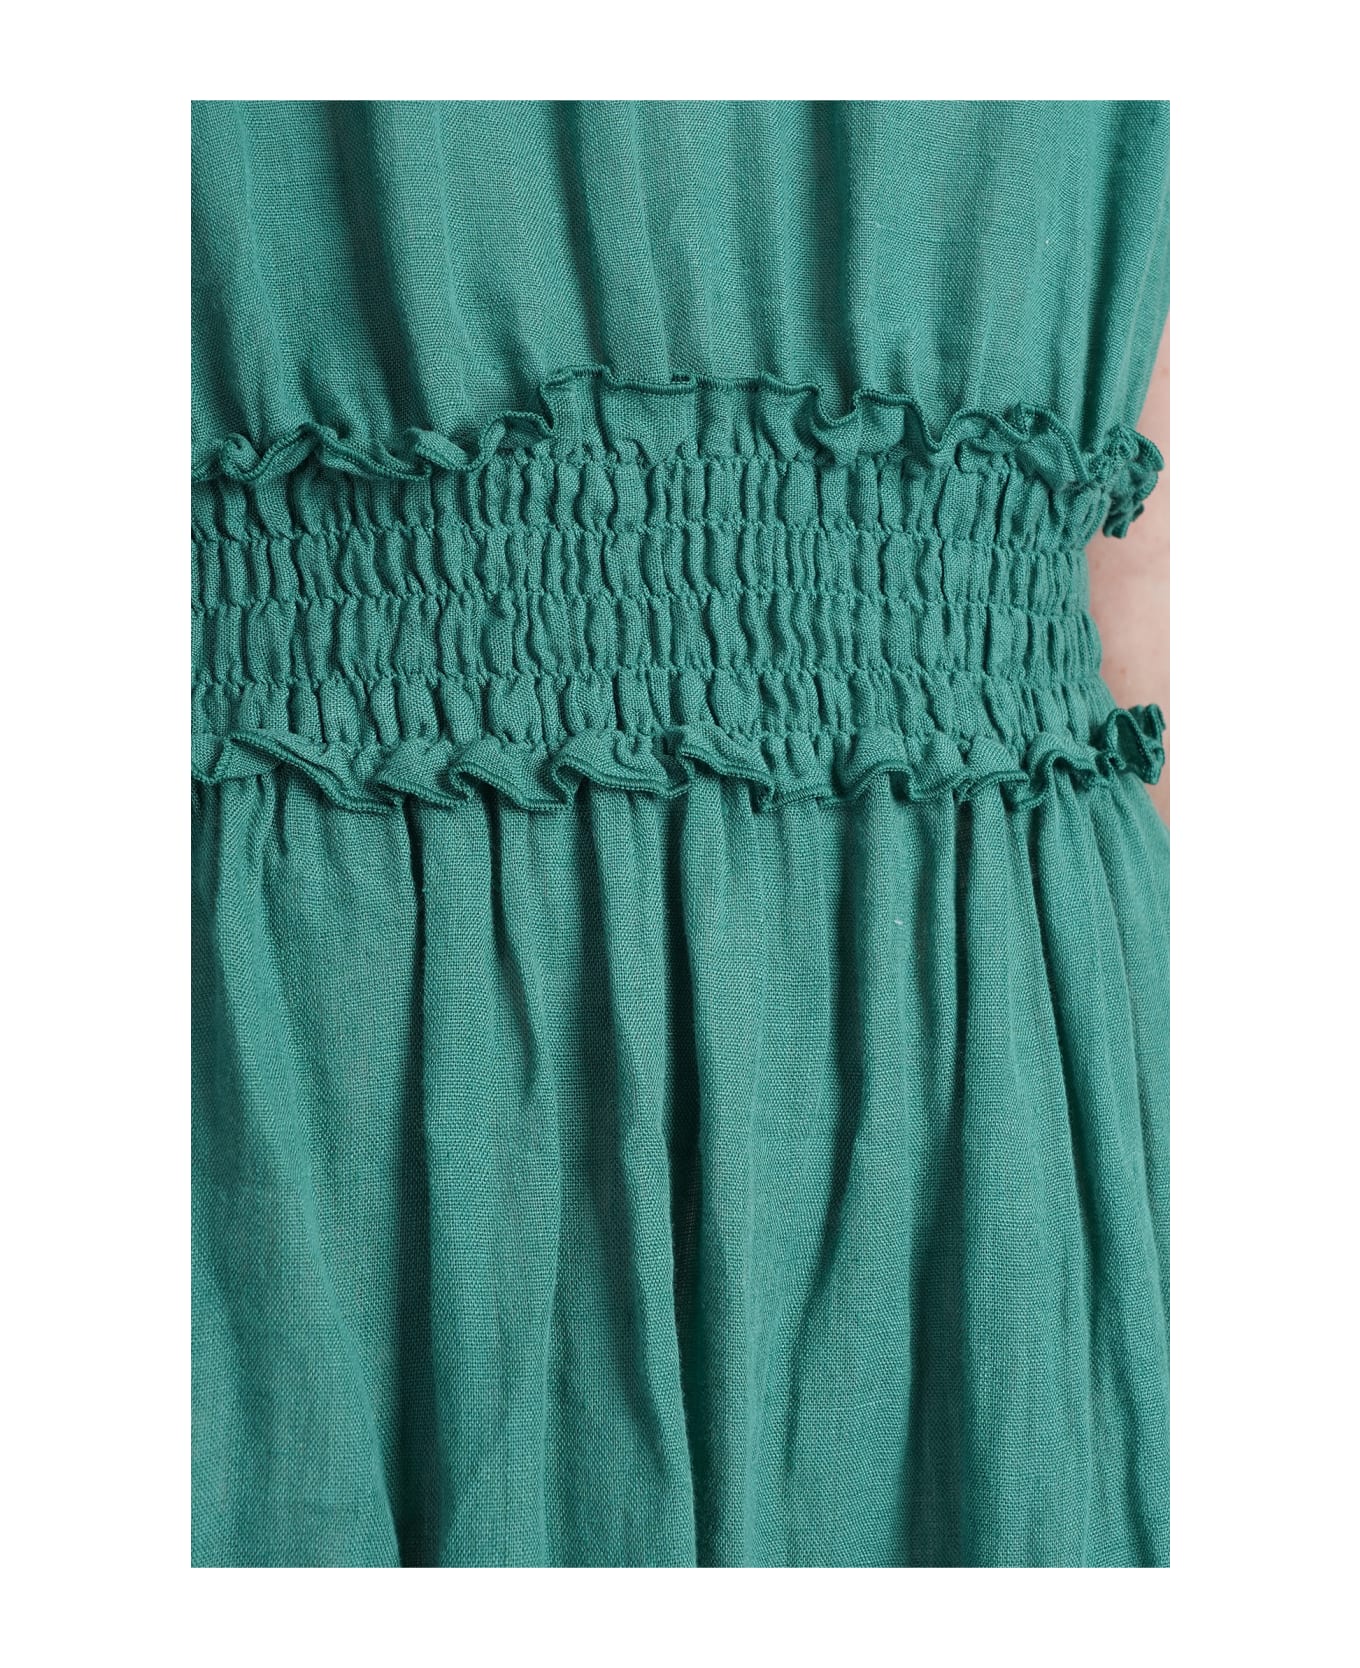 120% Lino Dress In Green Linen - green